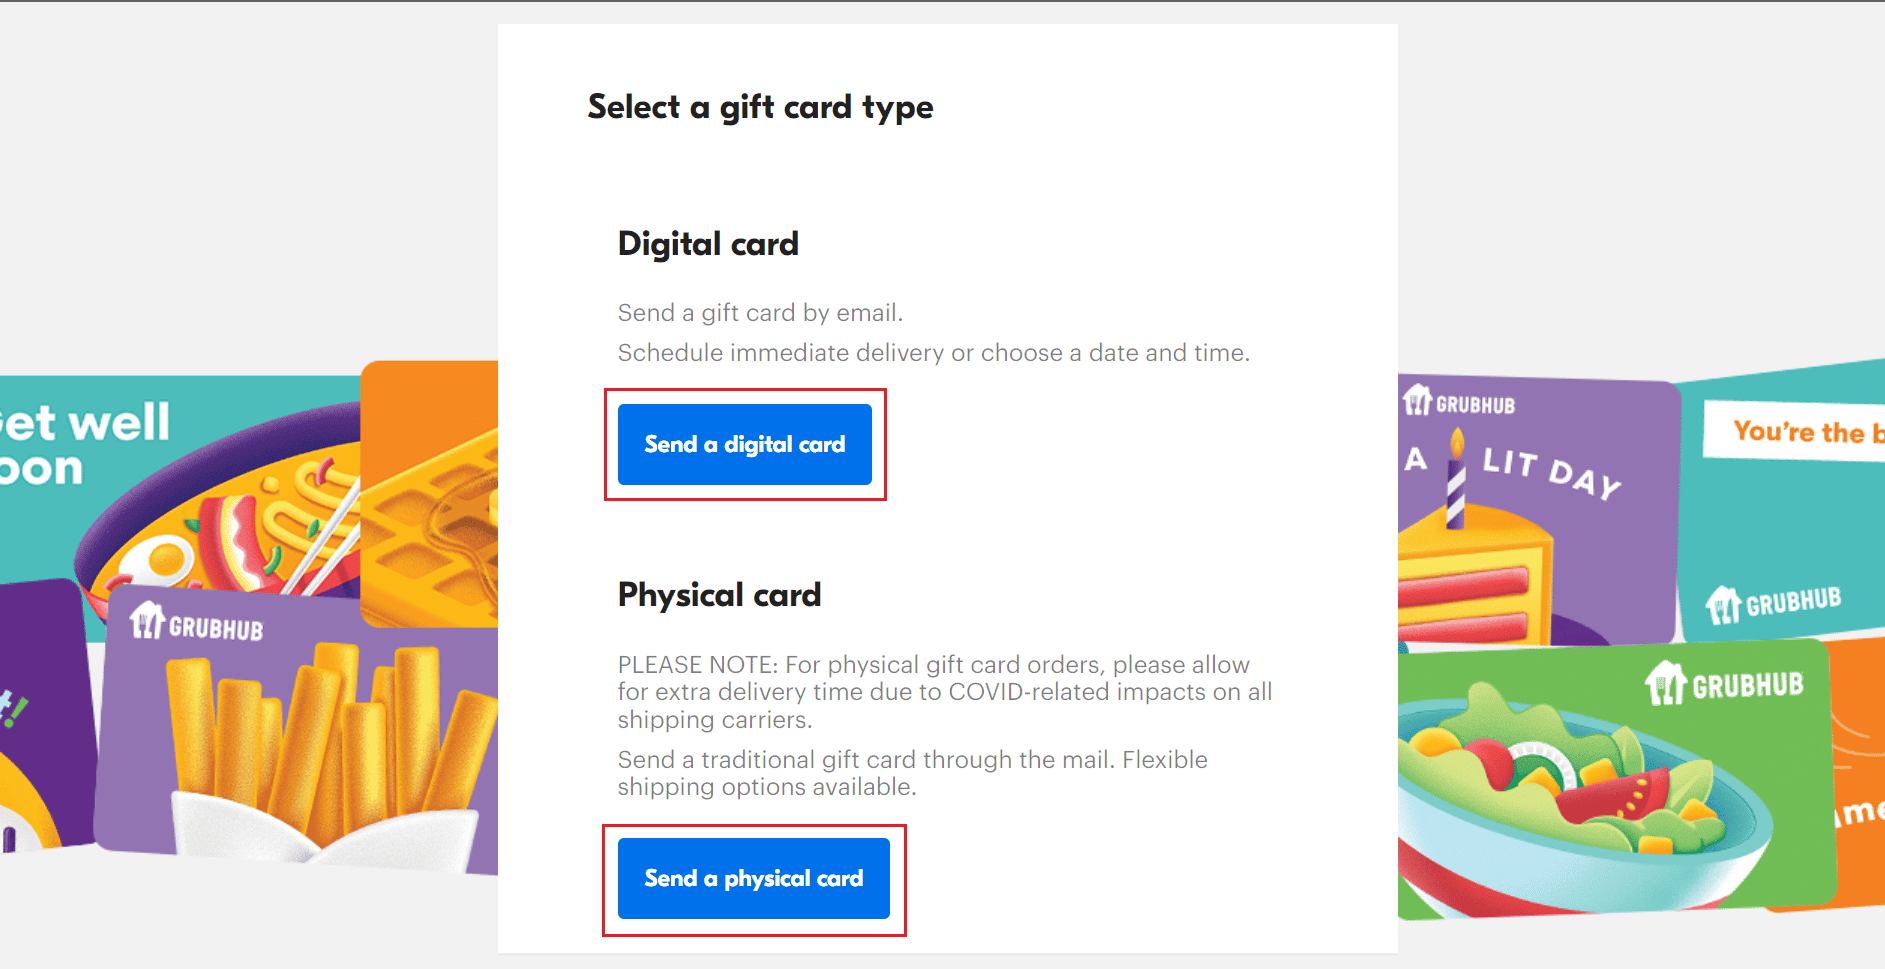 Click on Send a digital card or Send a physical card